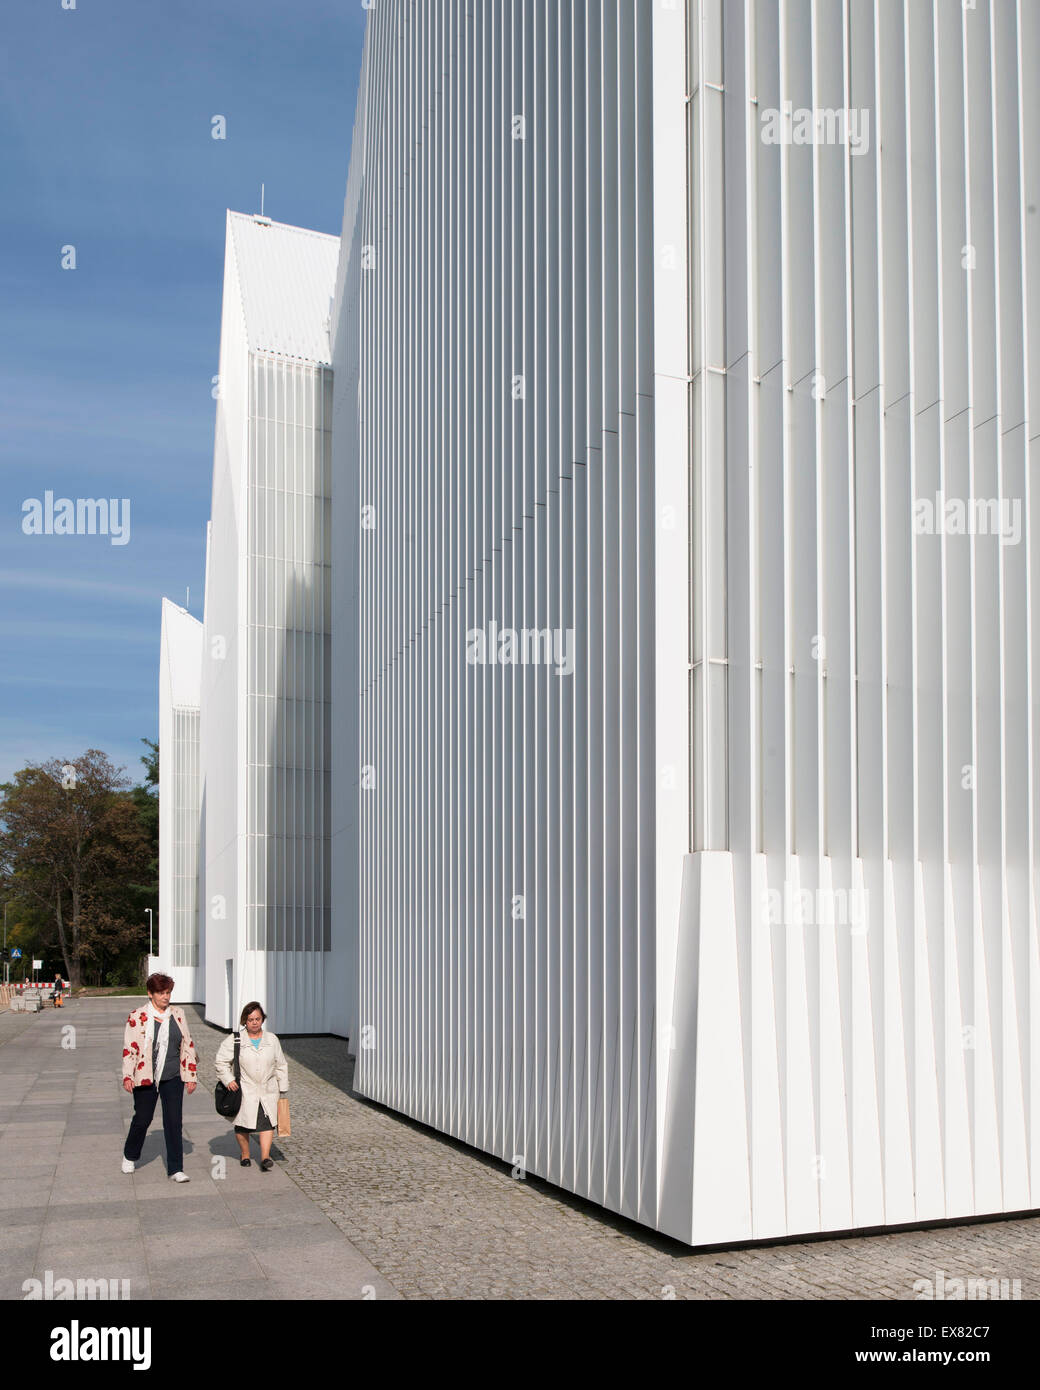 Facade perspective with walkway. Szczecin Philharmonic Hall, Szczecin, Poland. Architect: Estudio Barozzi Veiga, 2014. Stock Photo